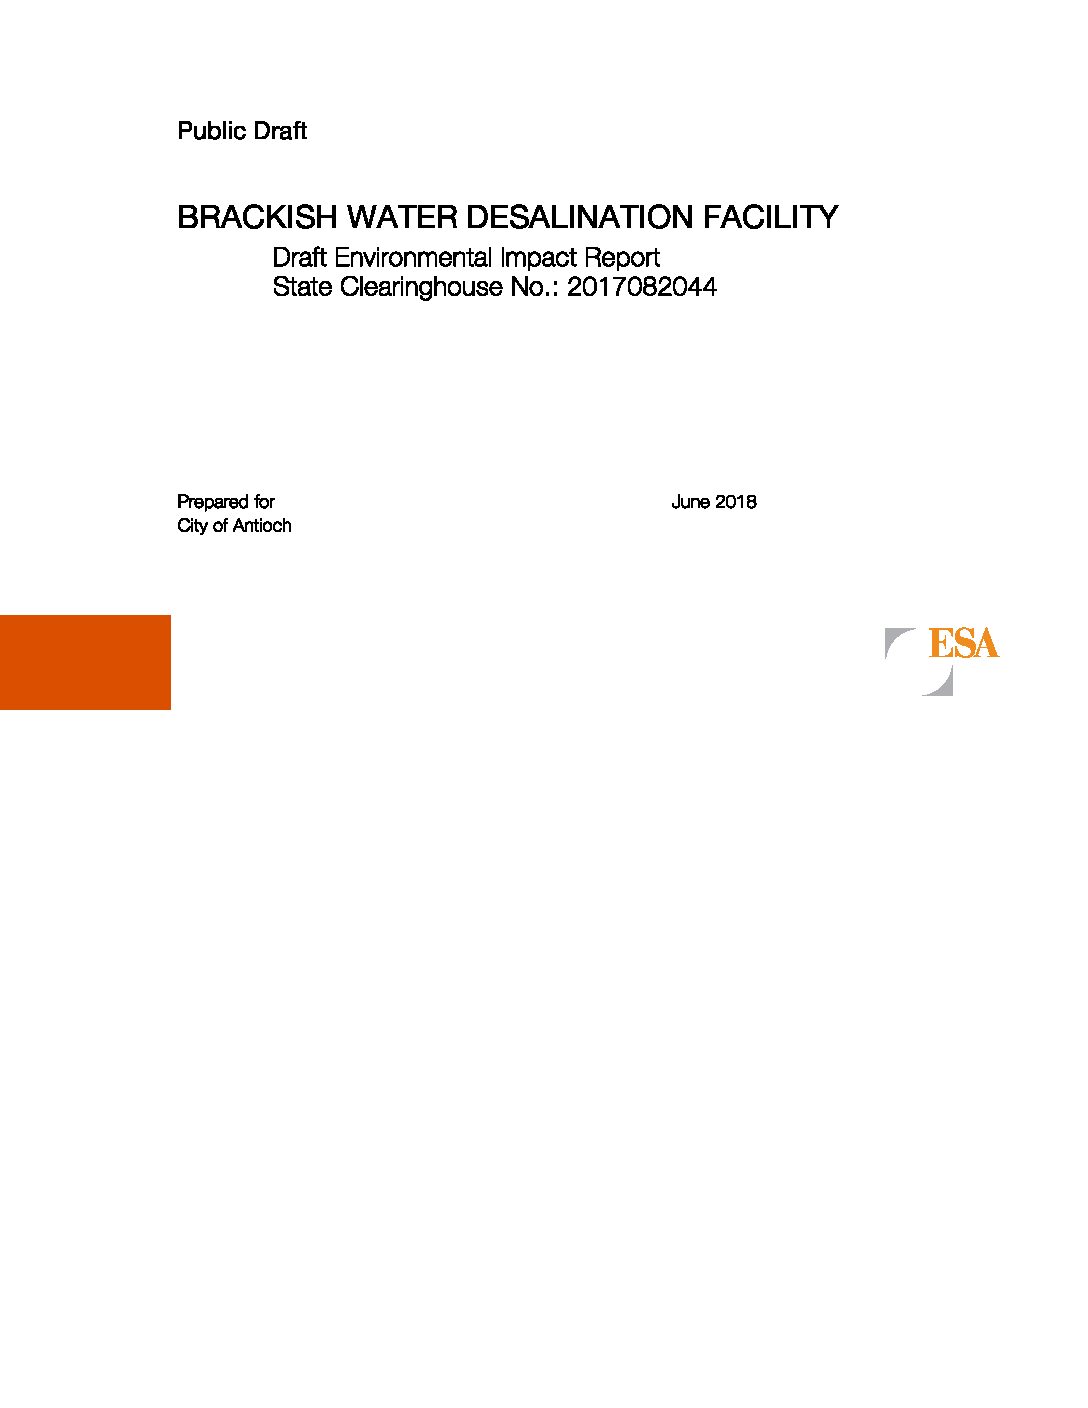 Brackish Water Desalination Facility Draft Environmental Impact Report